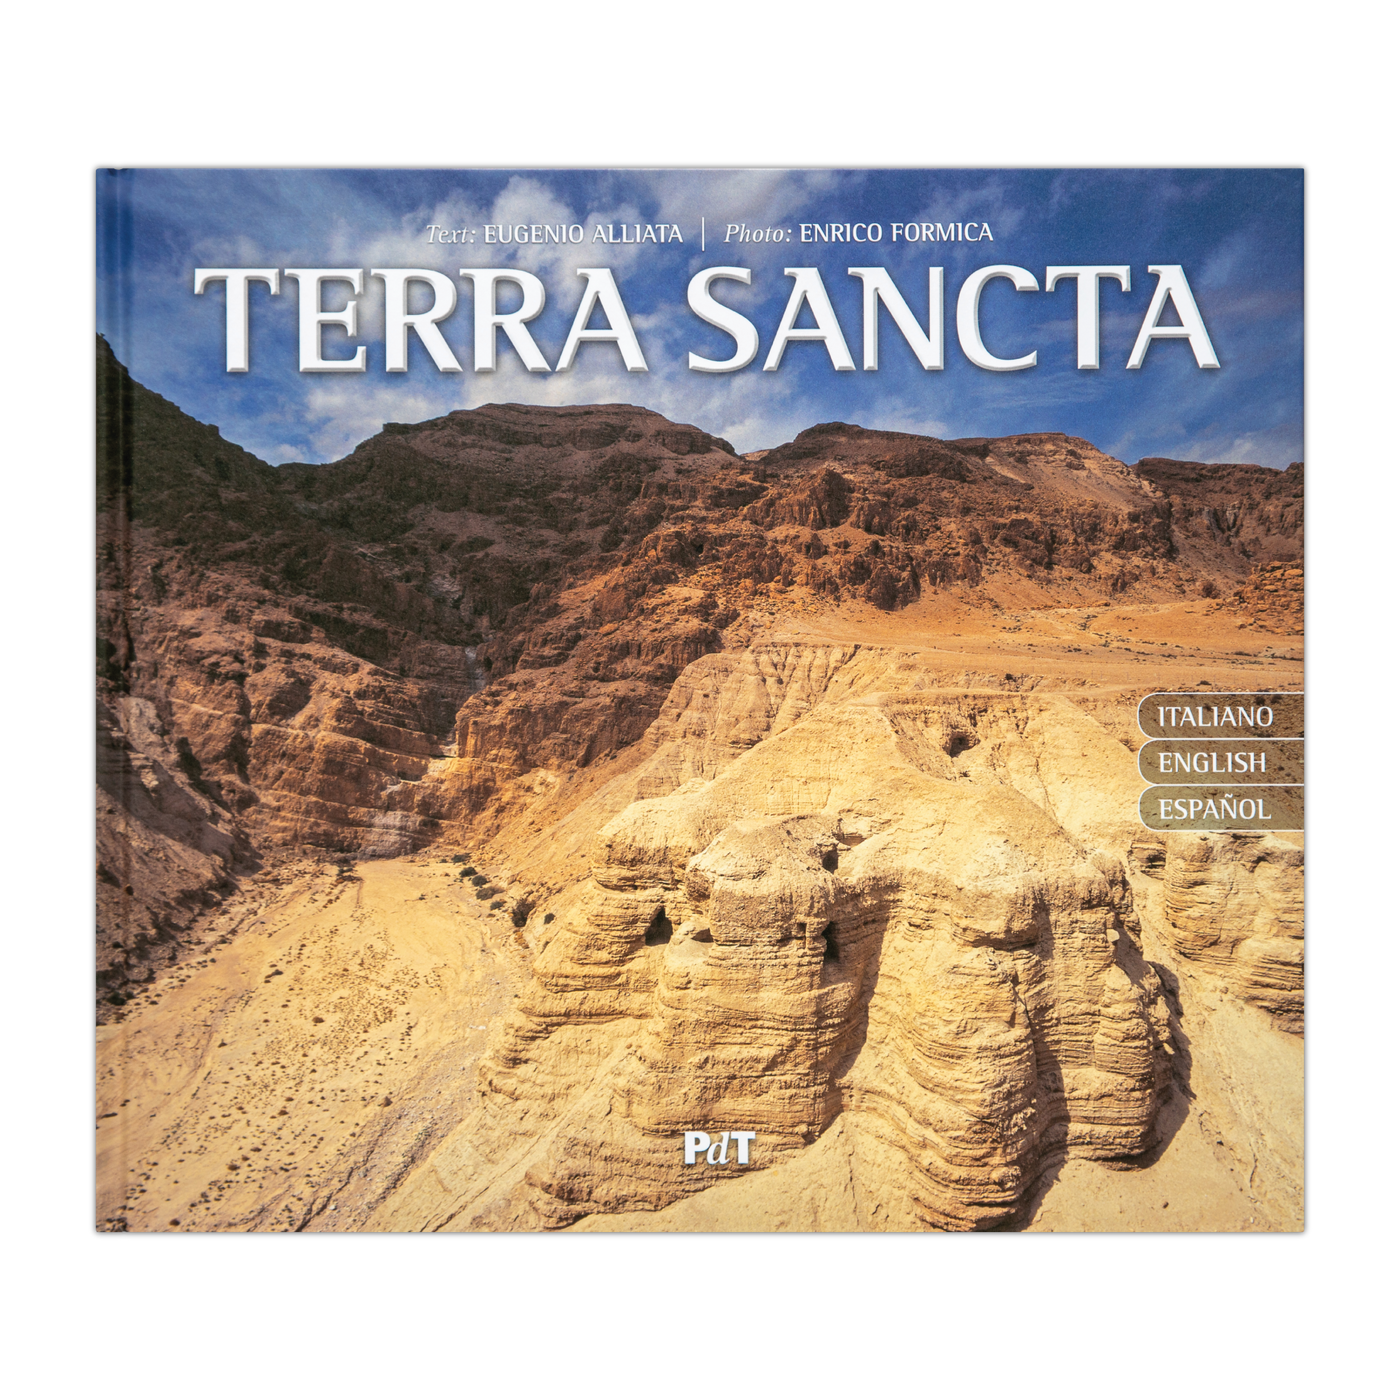 "TERRA SANCTA" by Eugenio Alliate & Enrico Formica, book in Italian, English and Spanish